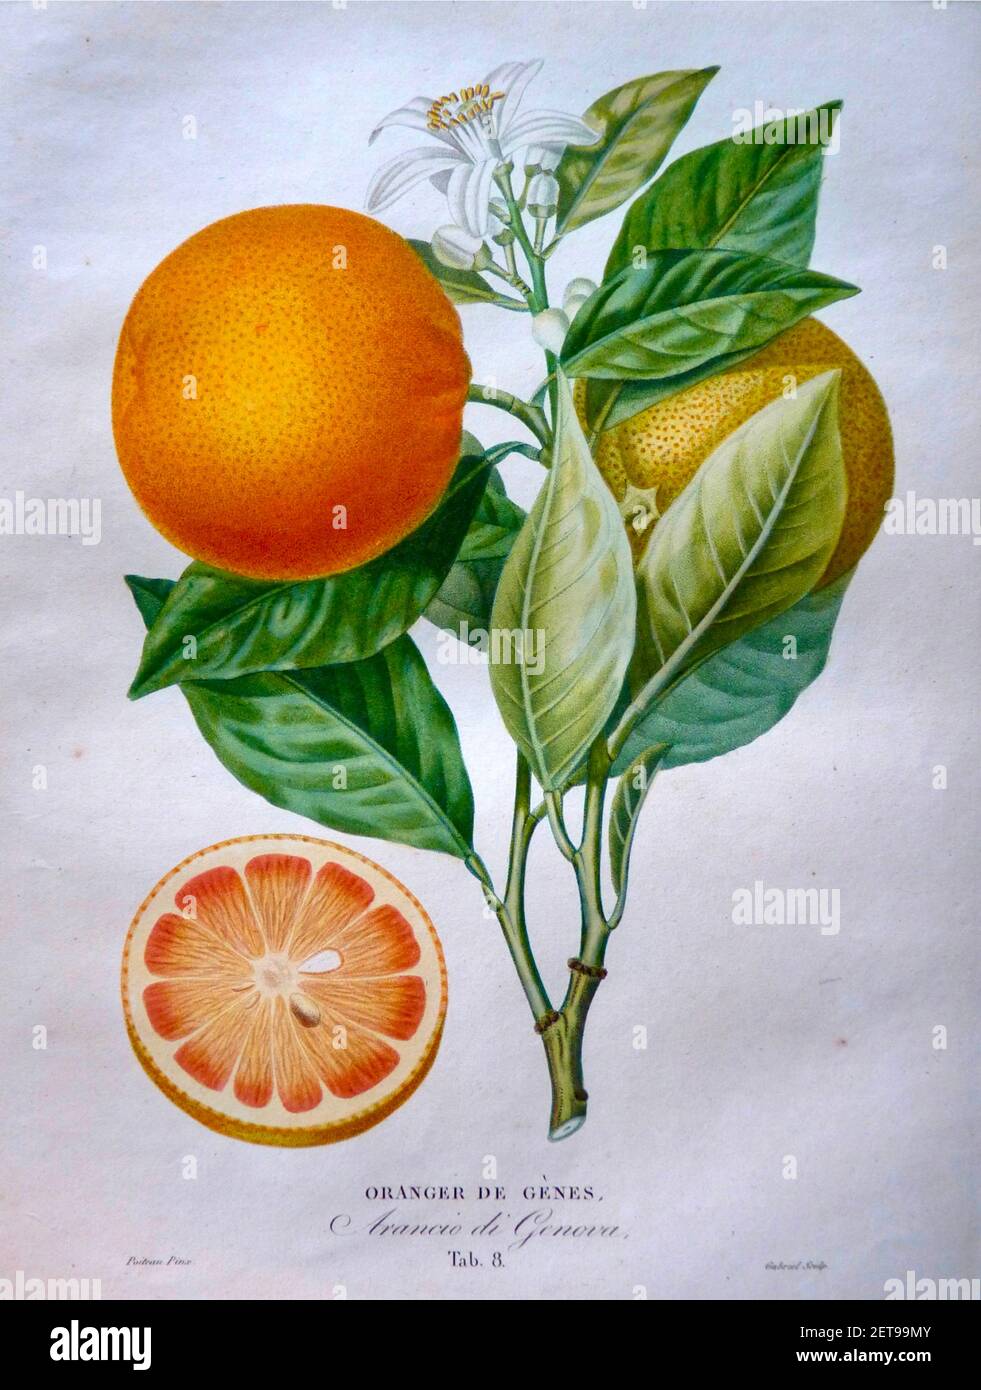 Oranger de Genes by Pierre Antoine Poiteau Stock Photo